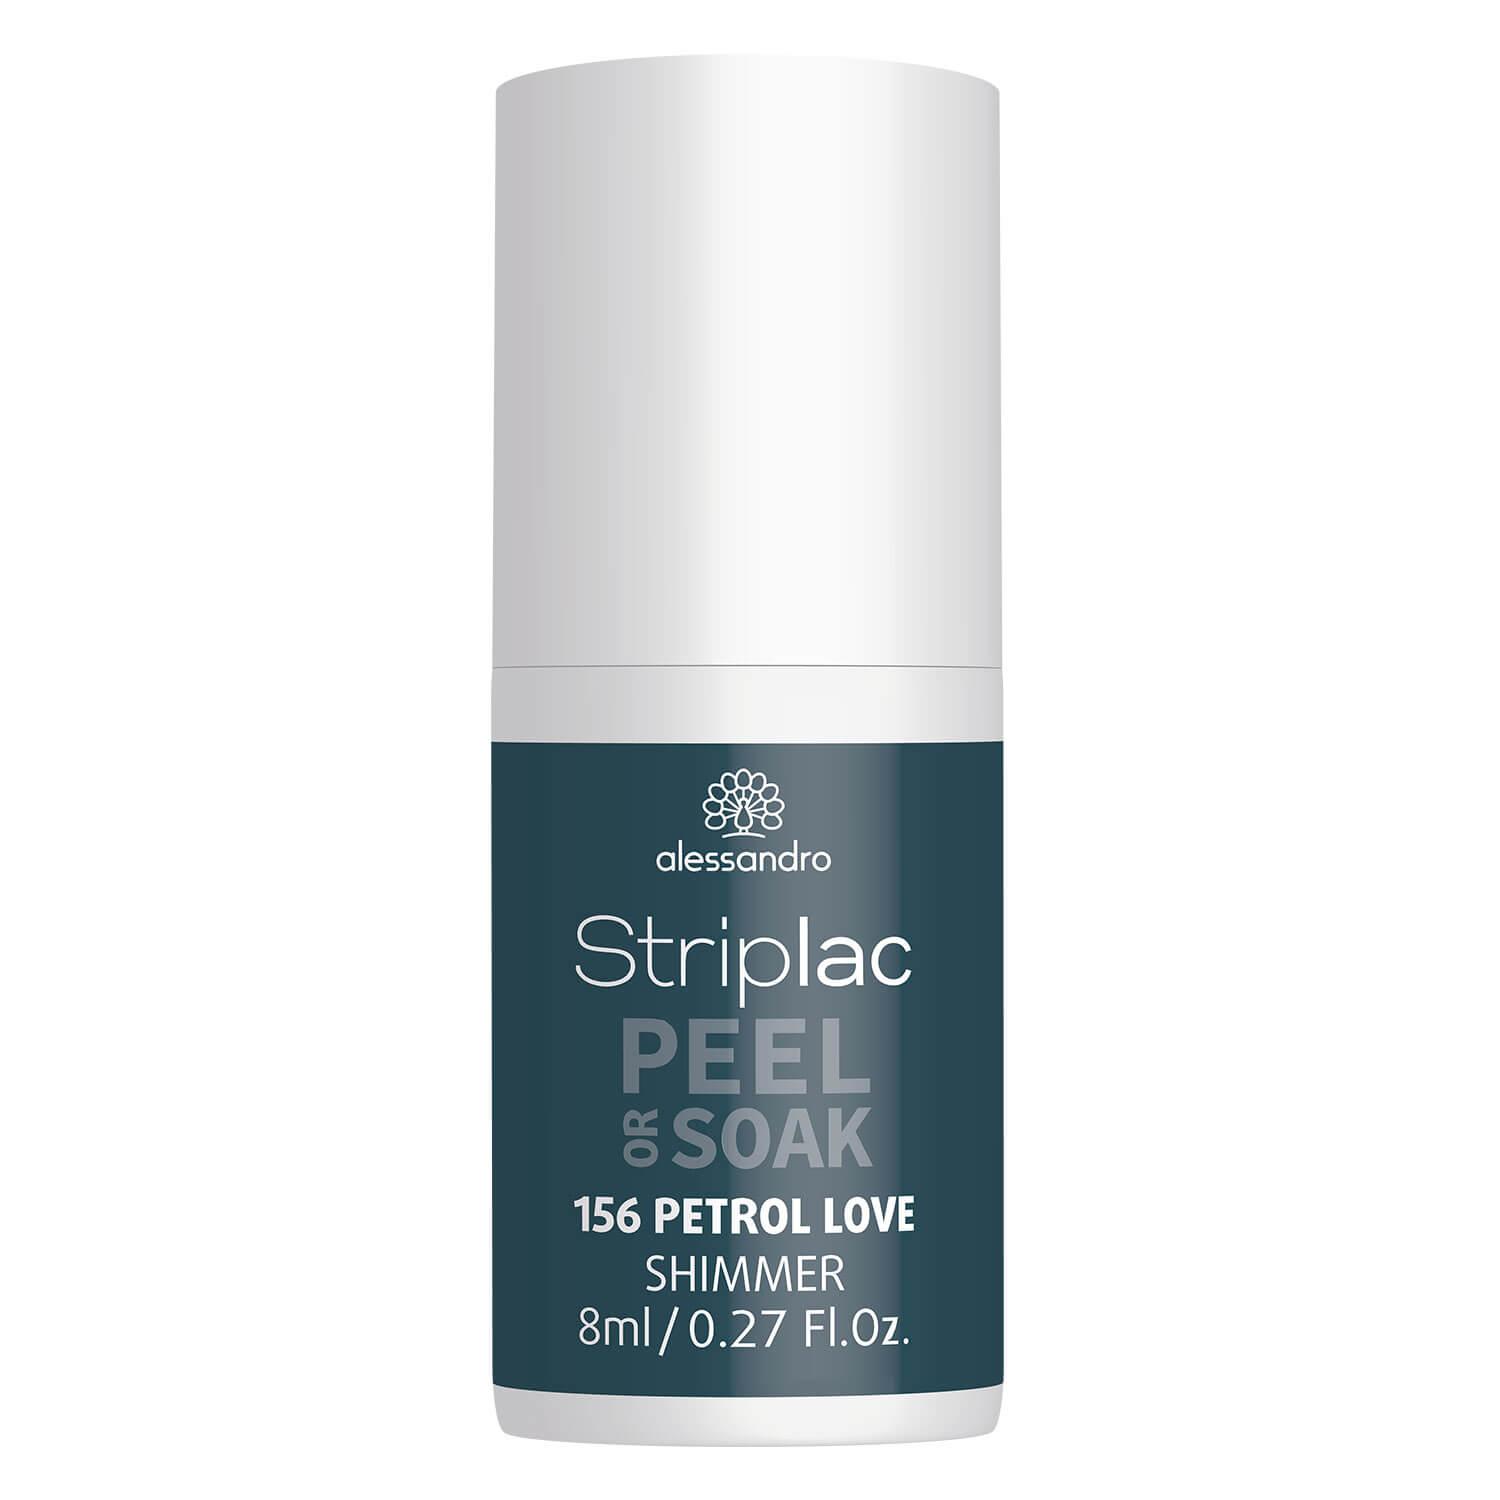 Striplac Peel or Soak - 156 Petrol Love